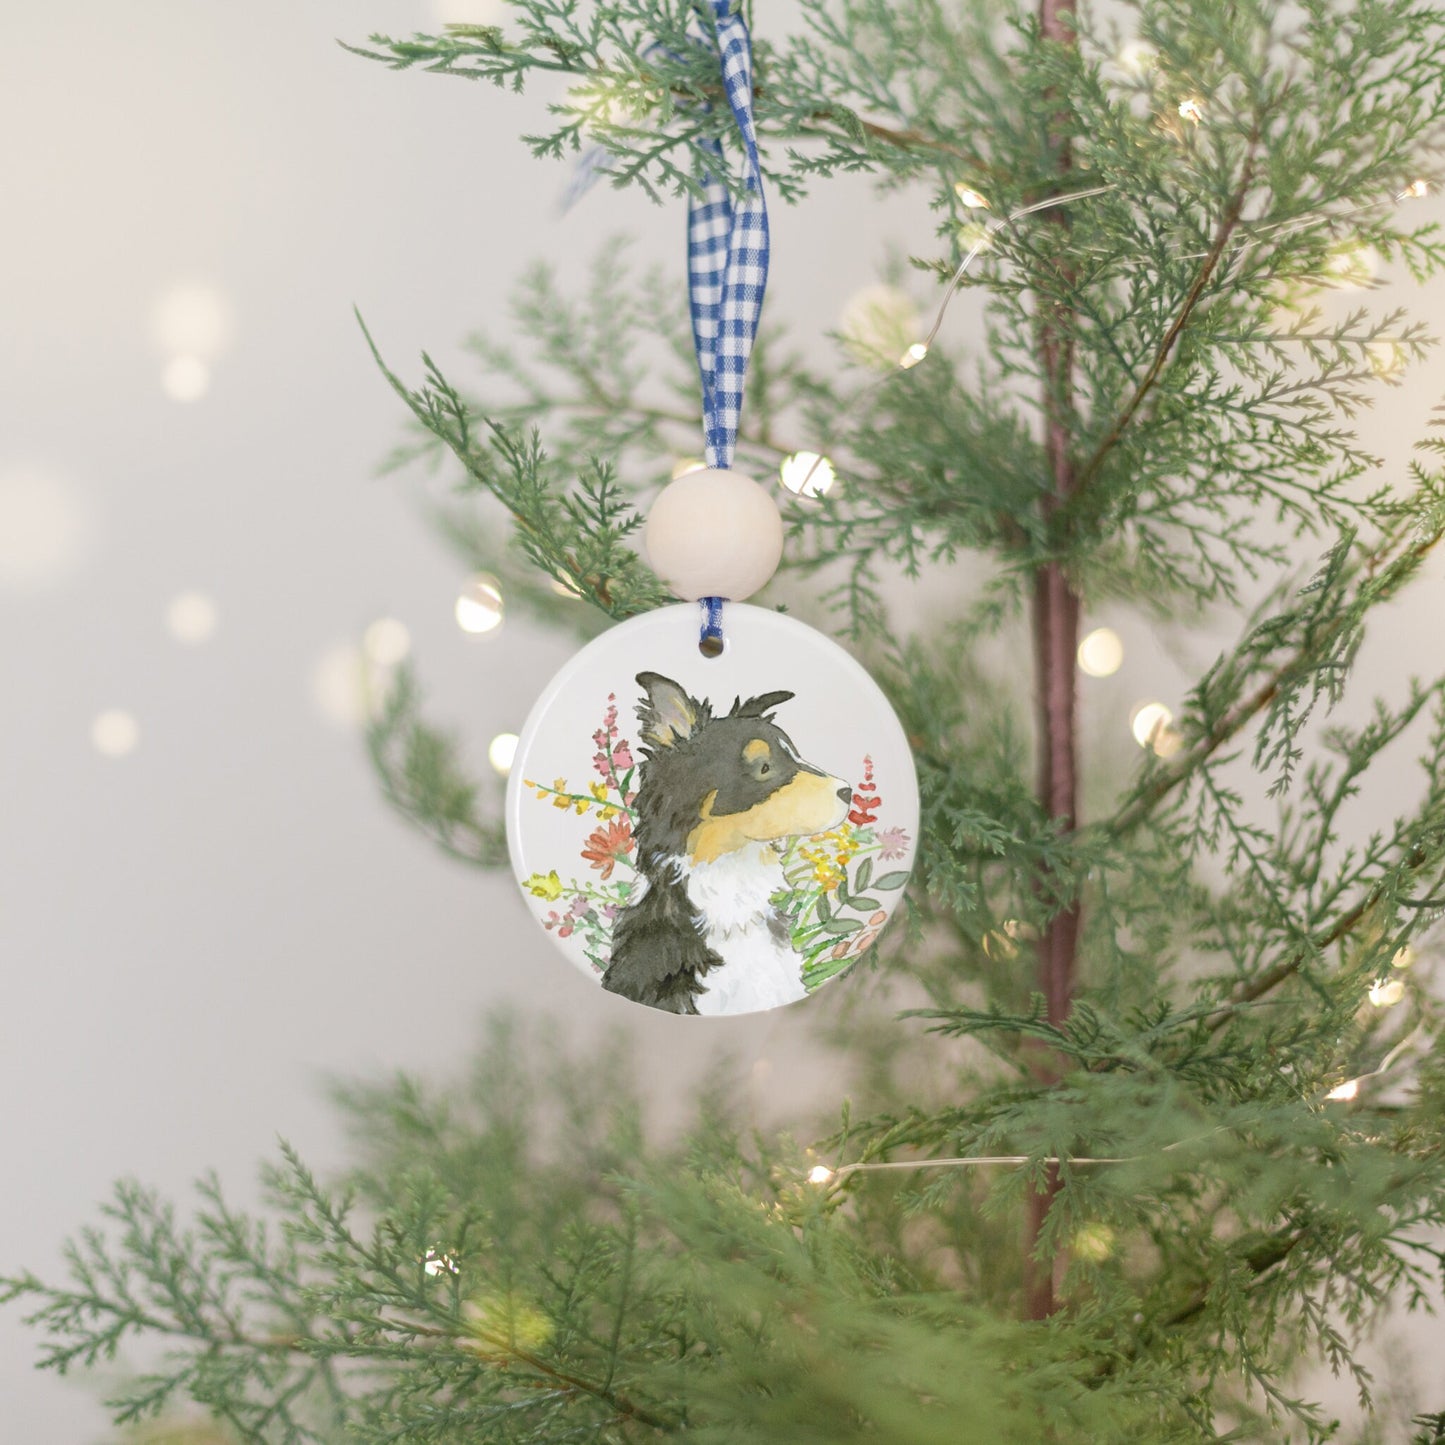 Black Tri Australian Shepherd Ornament, Personalized Gift for Aussie Lovers